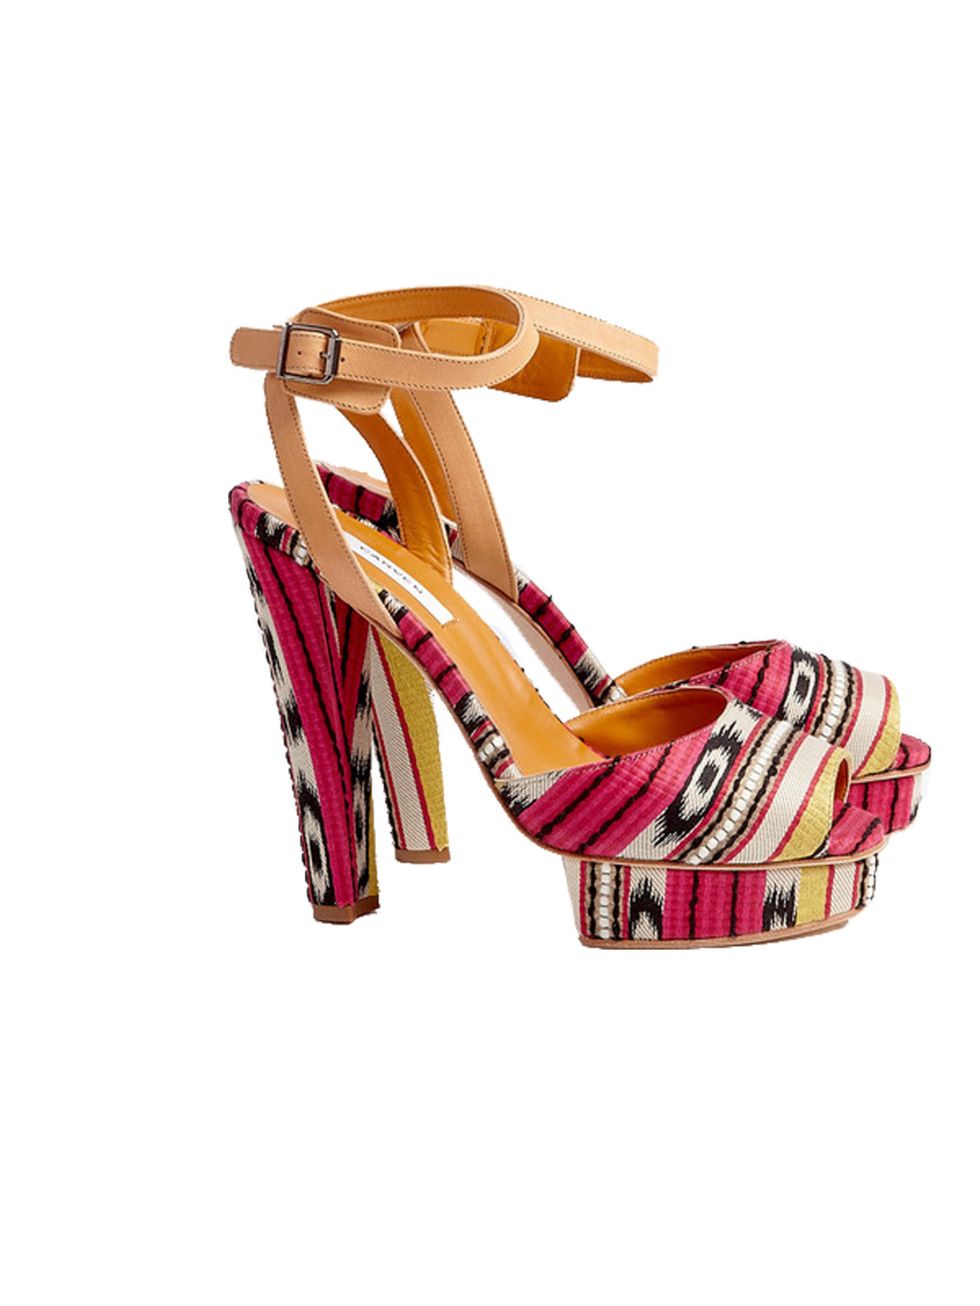 <p>Carven tribal heels, £164 (was £411), at <a href="http://www.my-wardrobe.com/no/carven/tribal-jaquard-heel-271150">my-wardrobe.com</a></p>